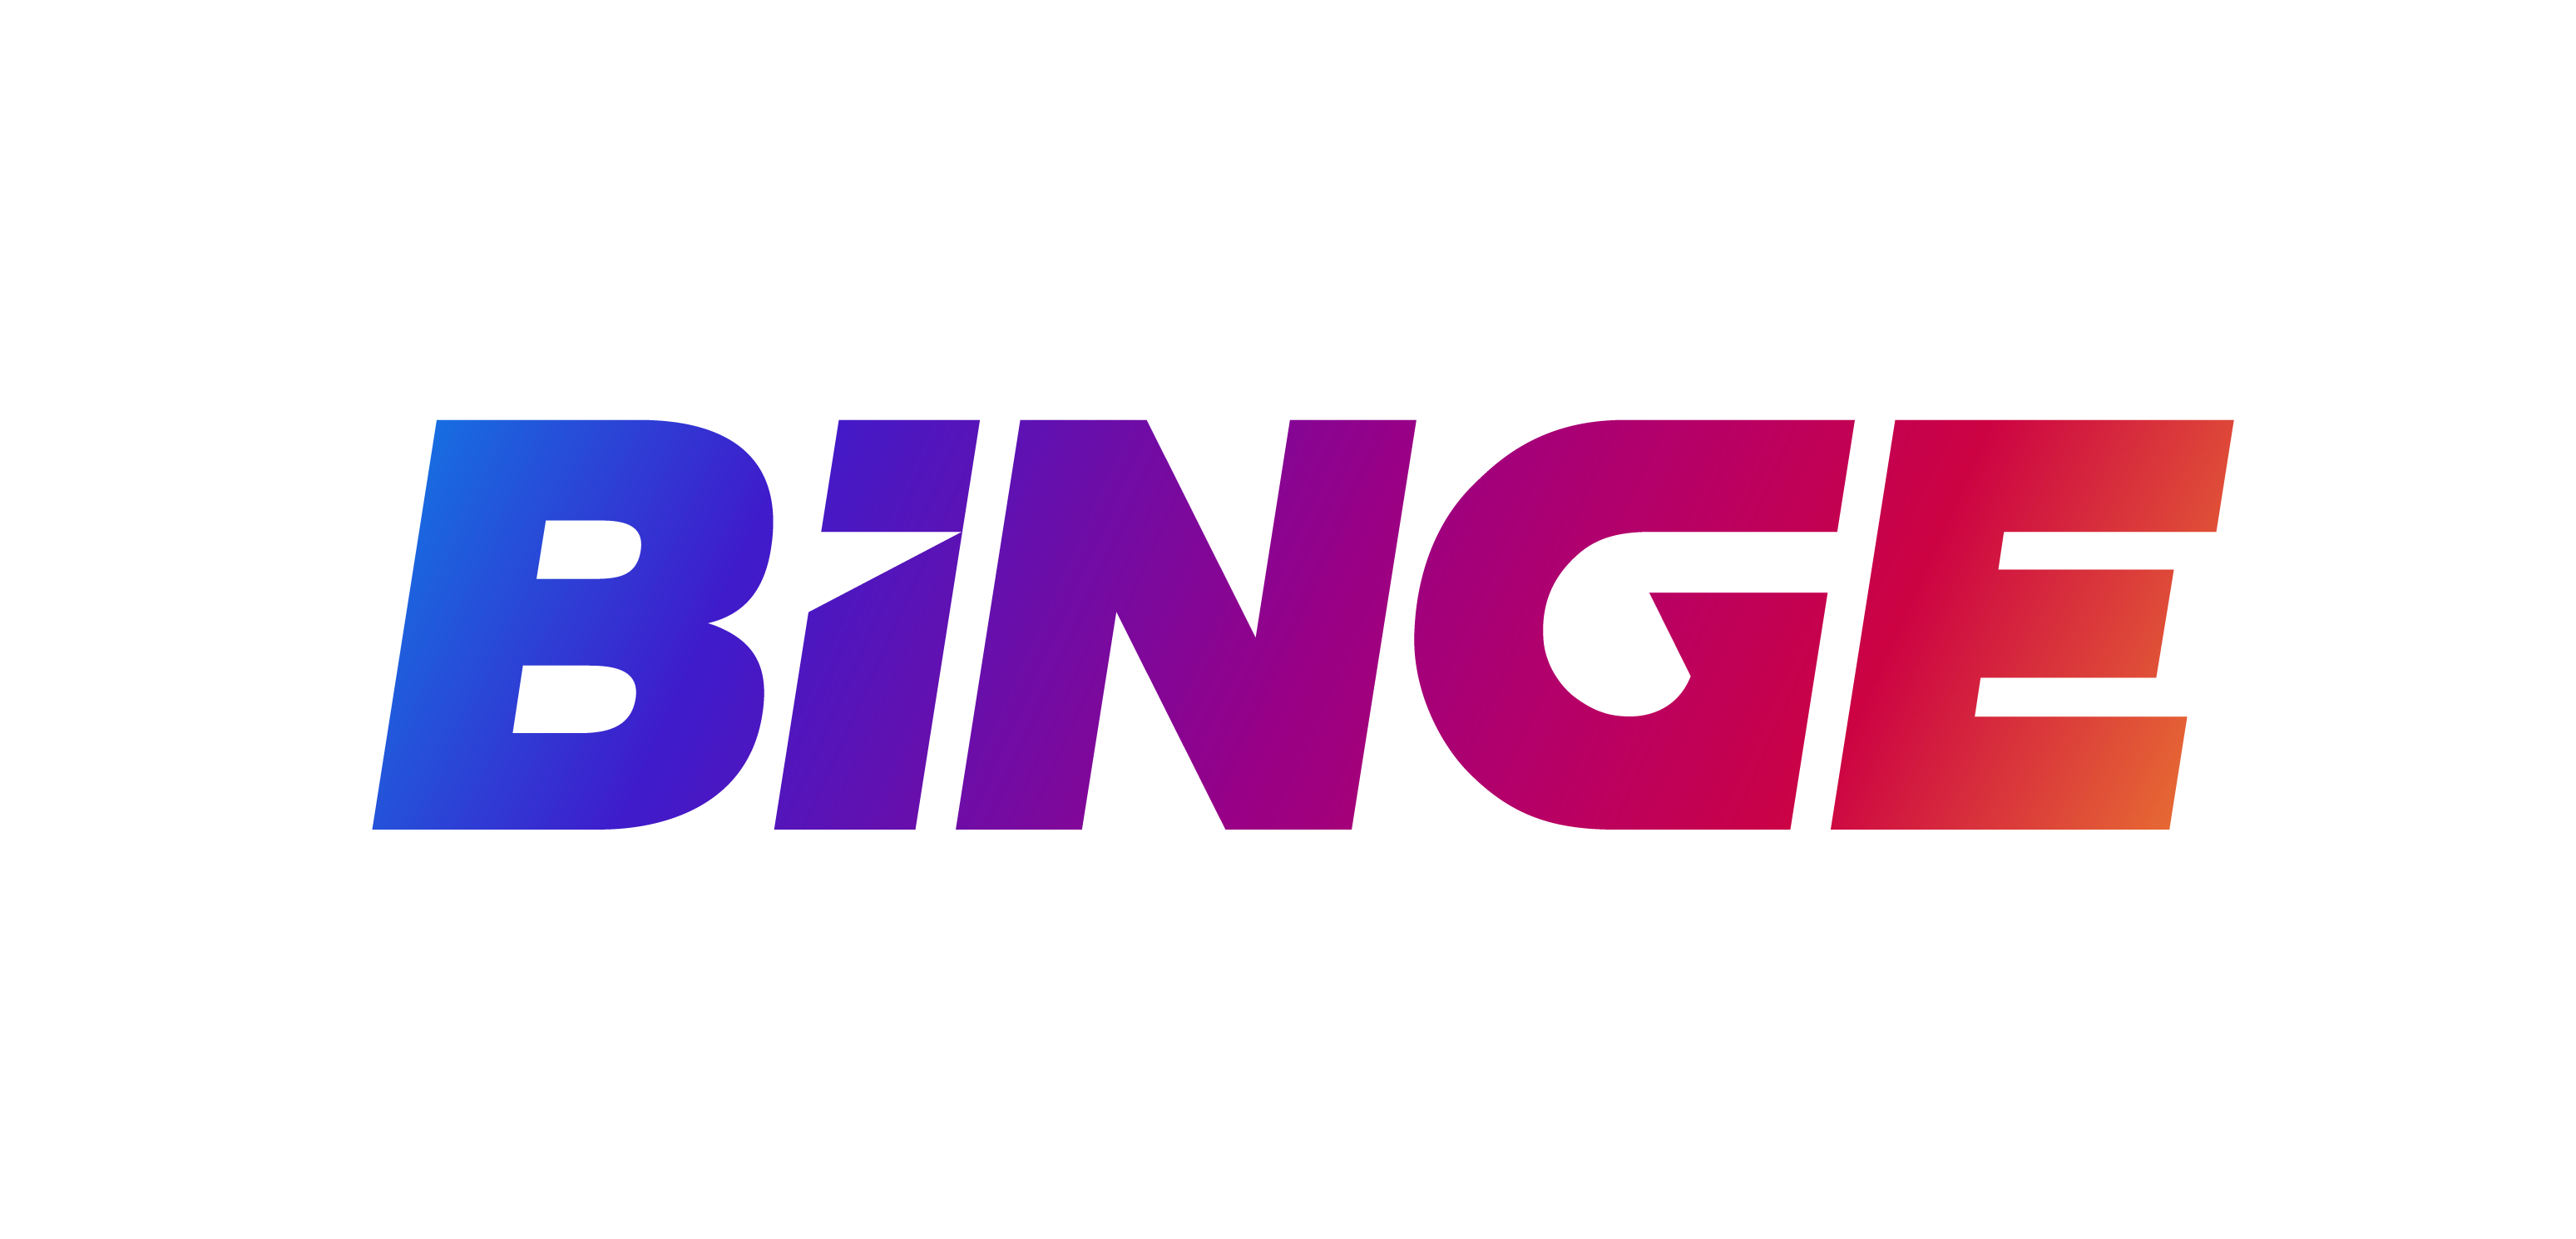 BINGE LOGO Netflix Has A New Competitor: Foxtel’s ‘BINGE’ Launches Monday